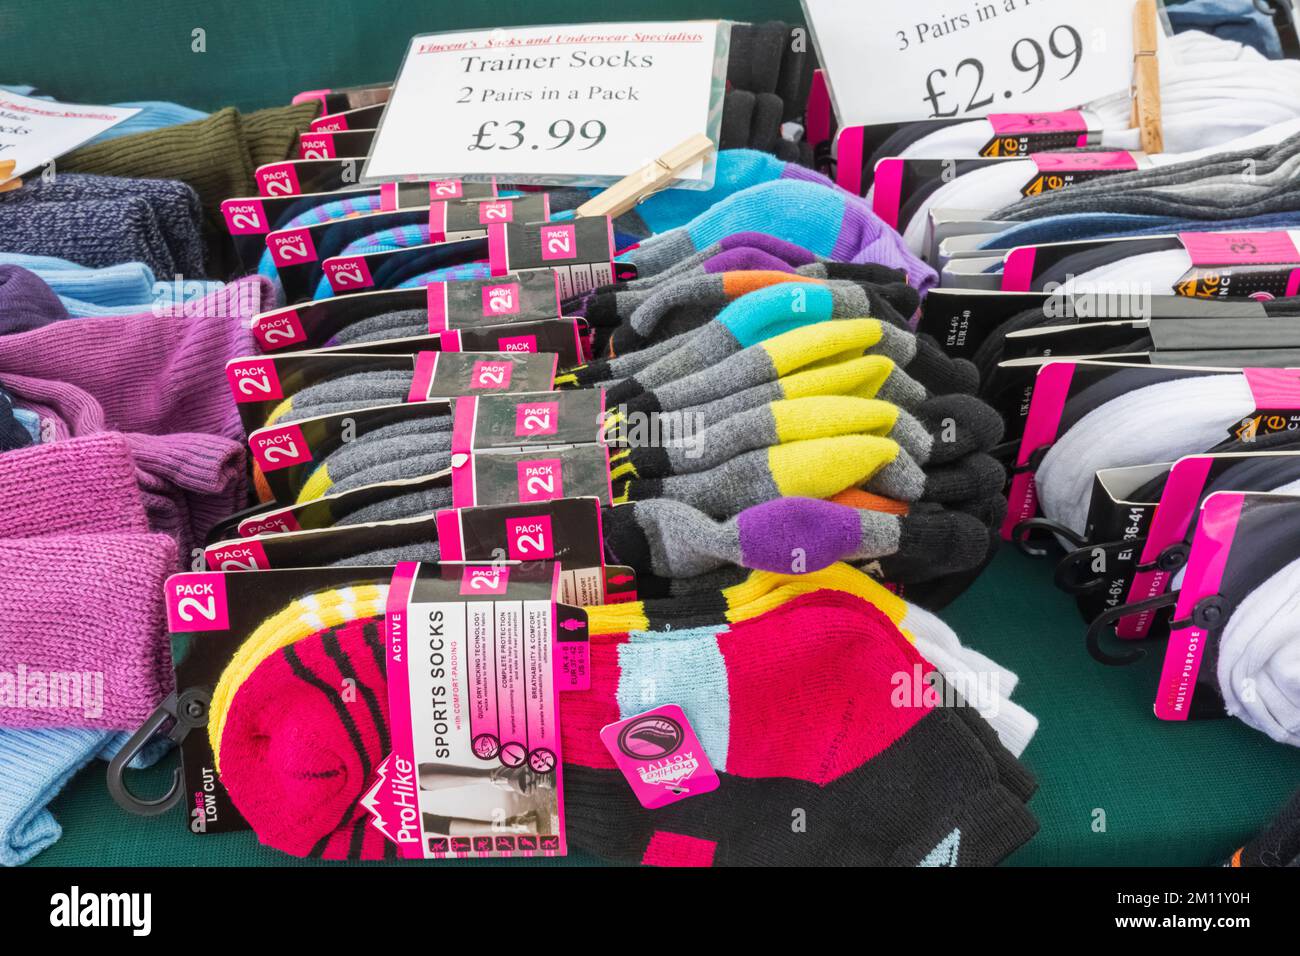 England, Dorset, Christchurch, Christchurch Market, Clothing Stall display of Socks Stock Photo